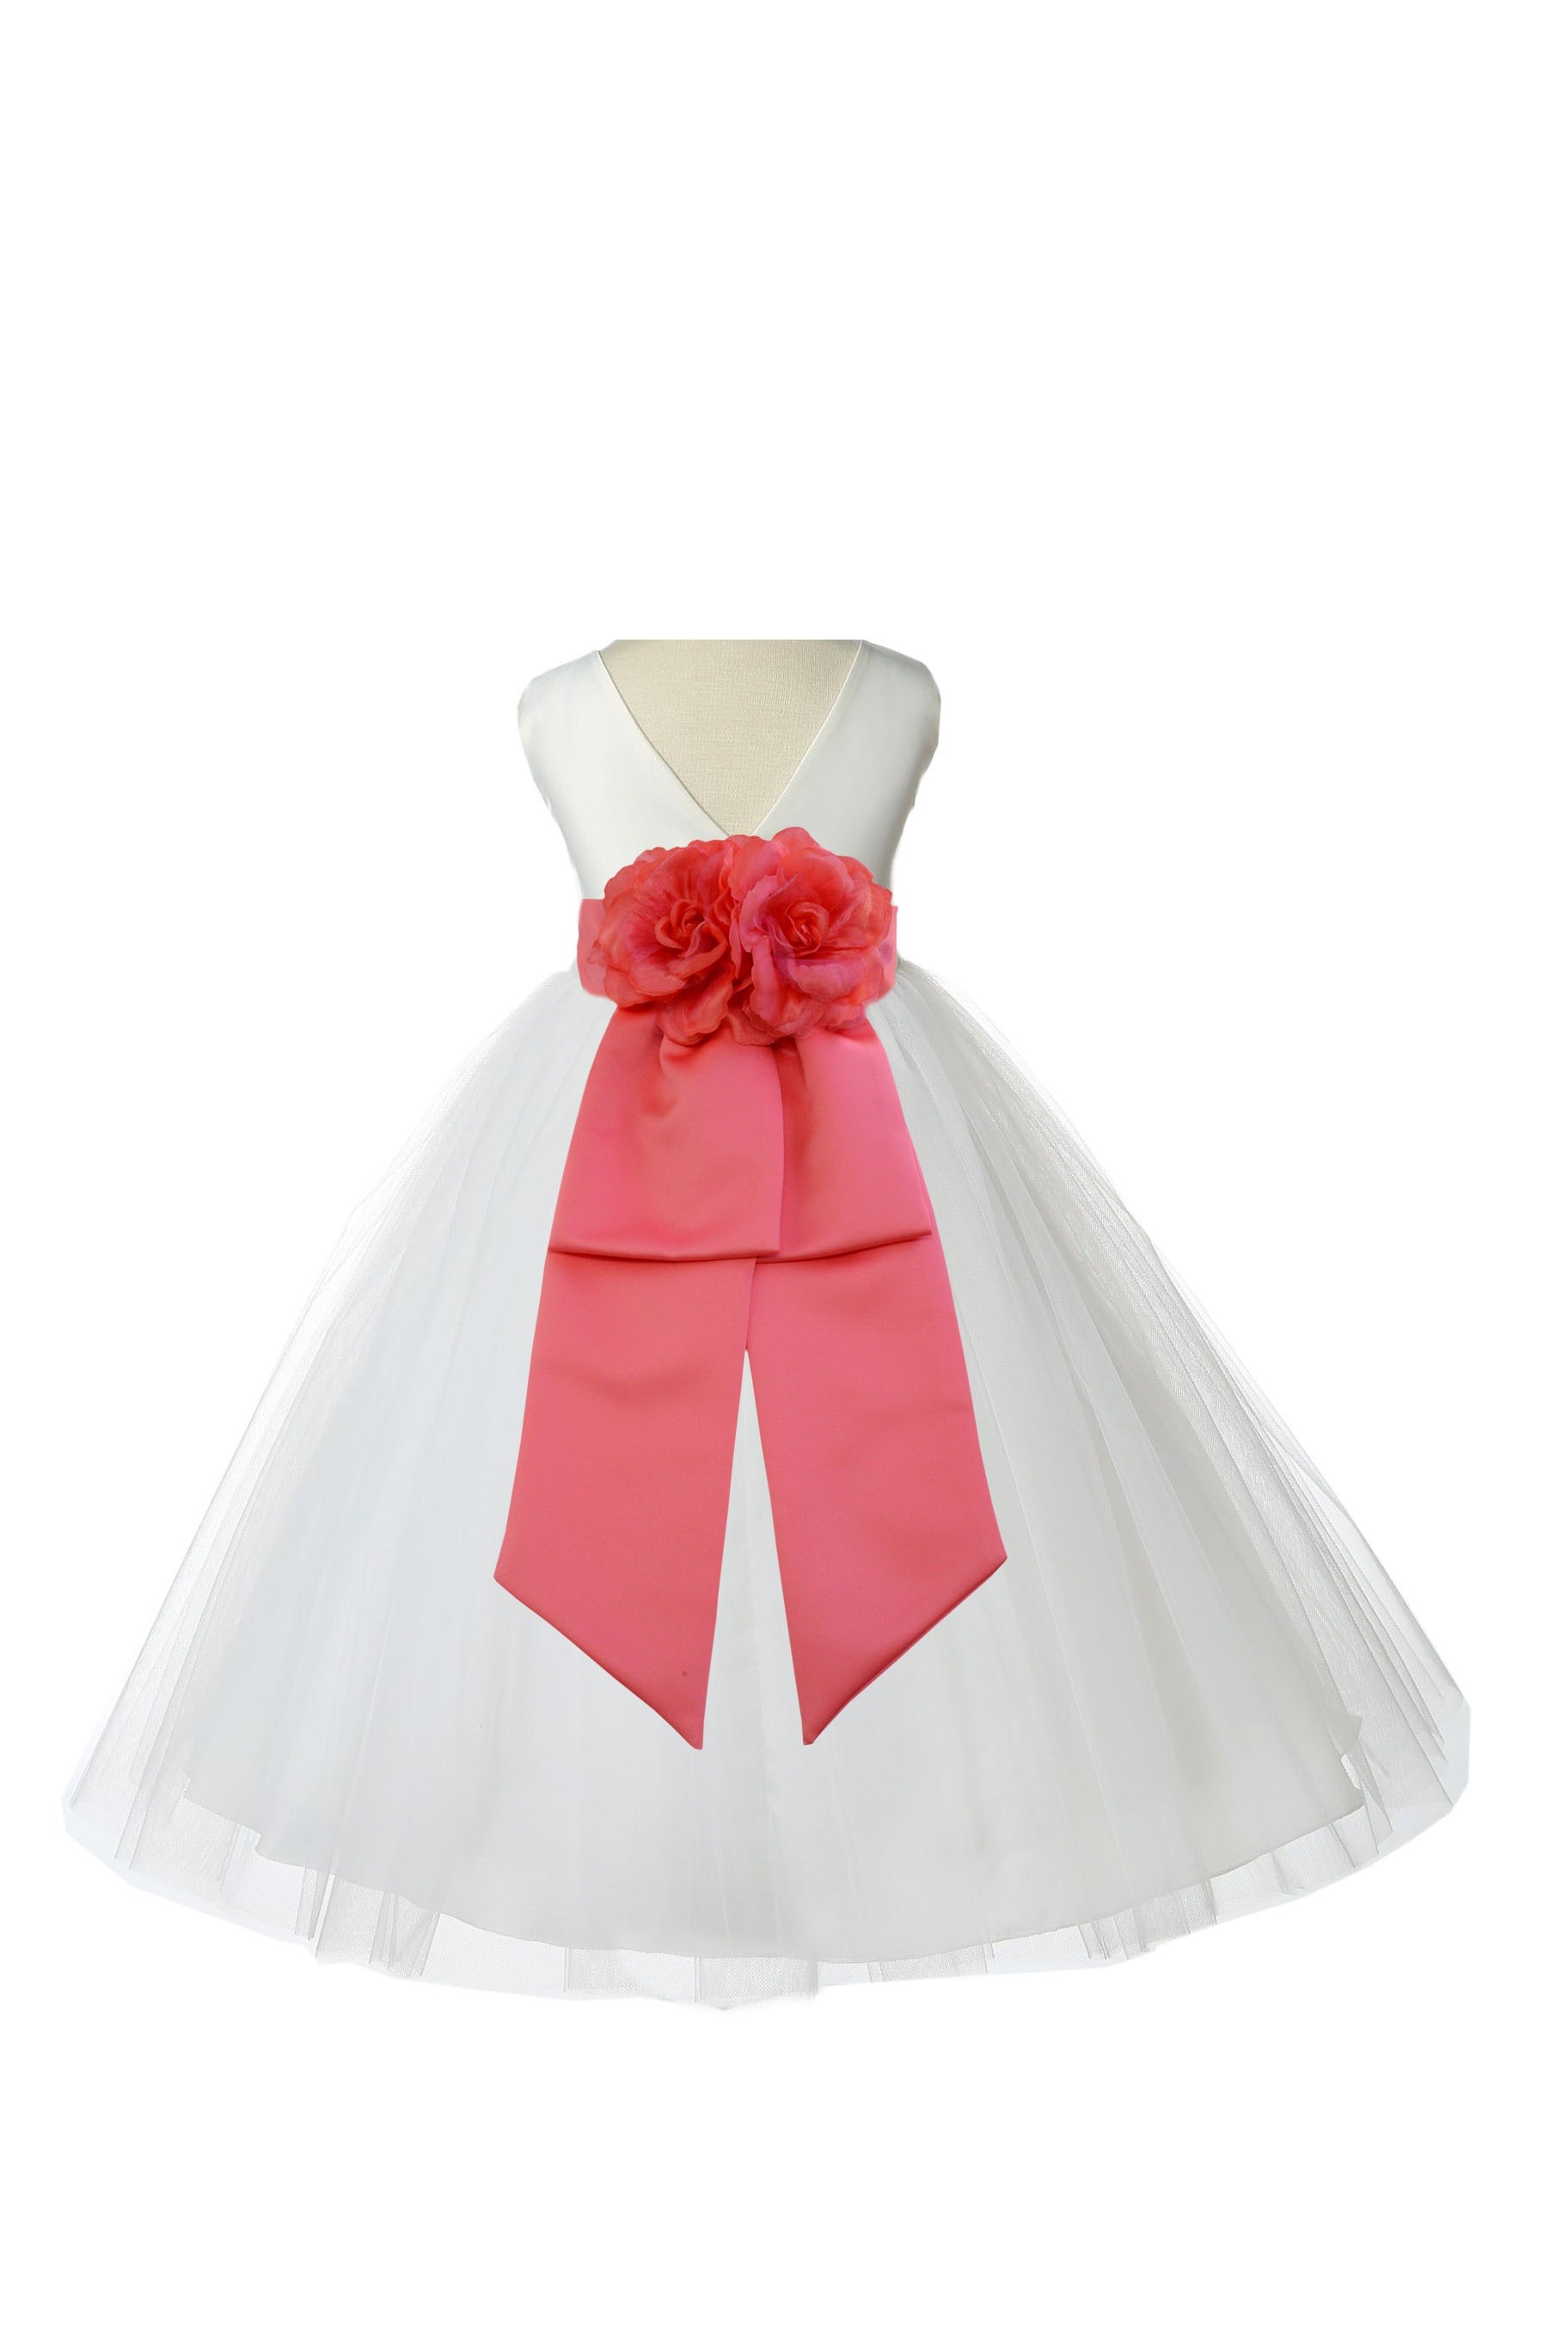 V-Neck Tulle Ivory/Coral Flower Girl Dress Wedding Pageant 108